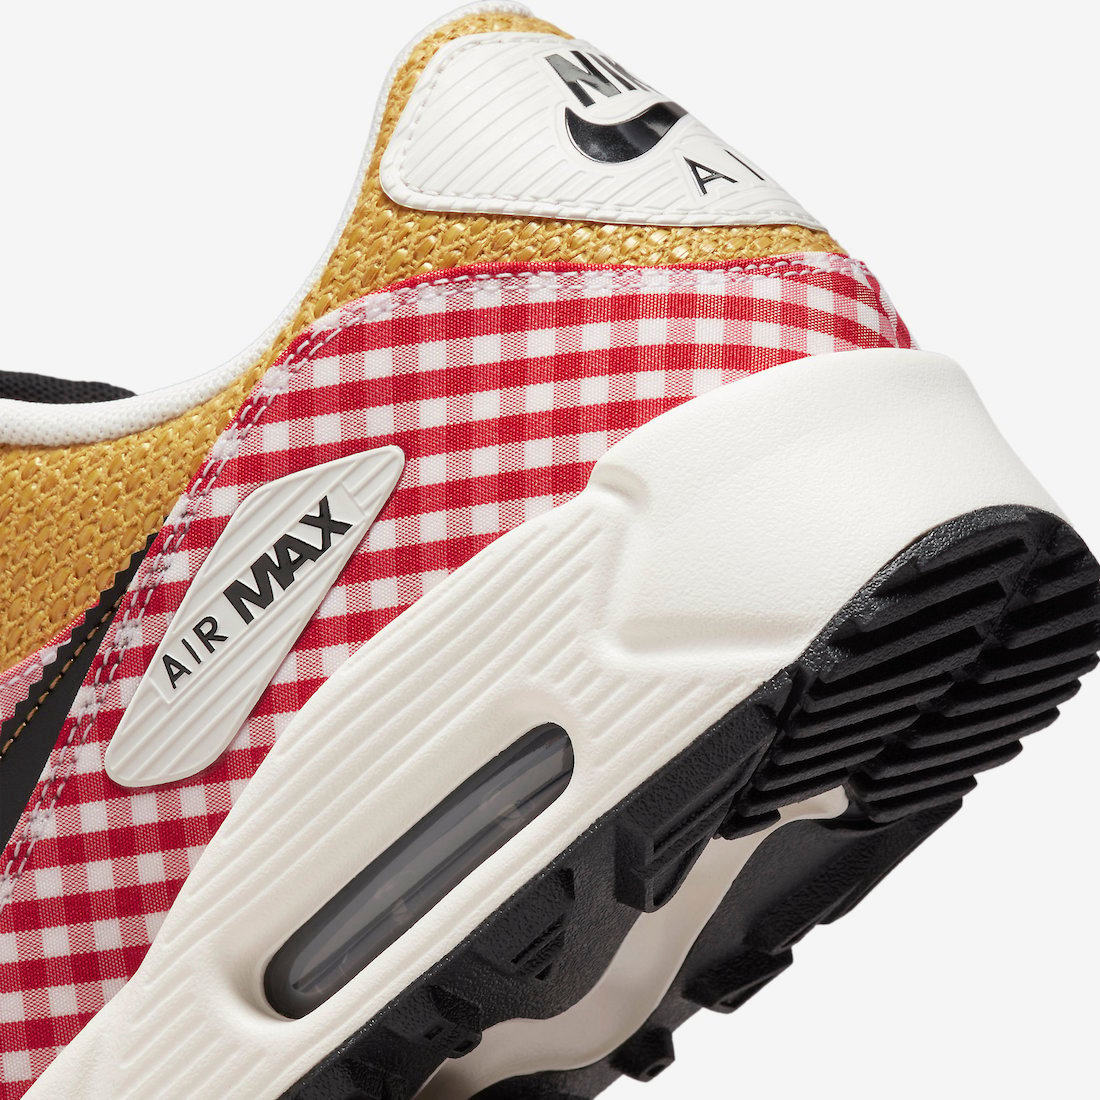 Nike Air Max 90 Golf Picnic DH5244-600 Release Date Info